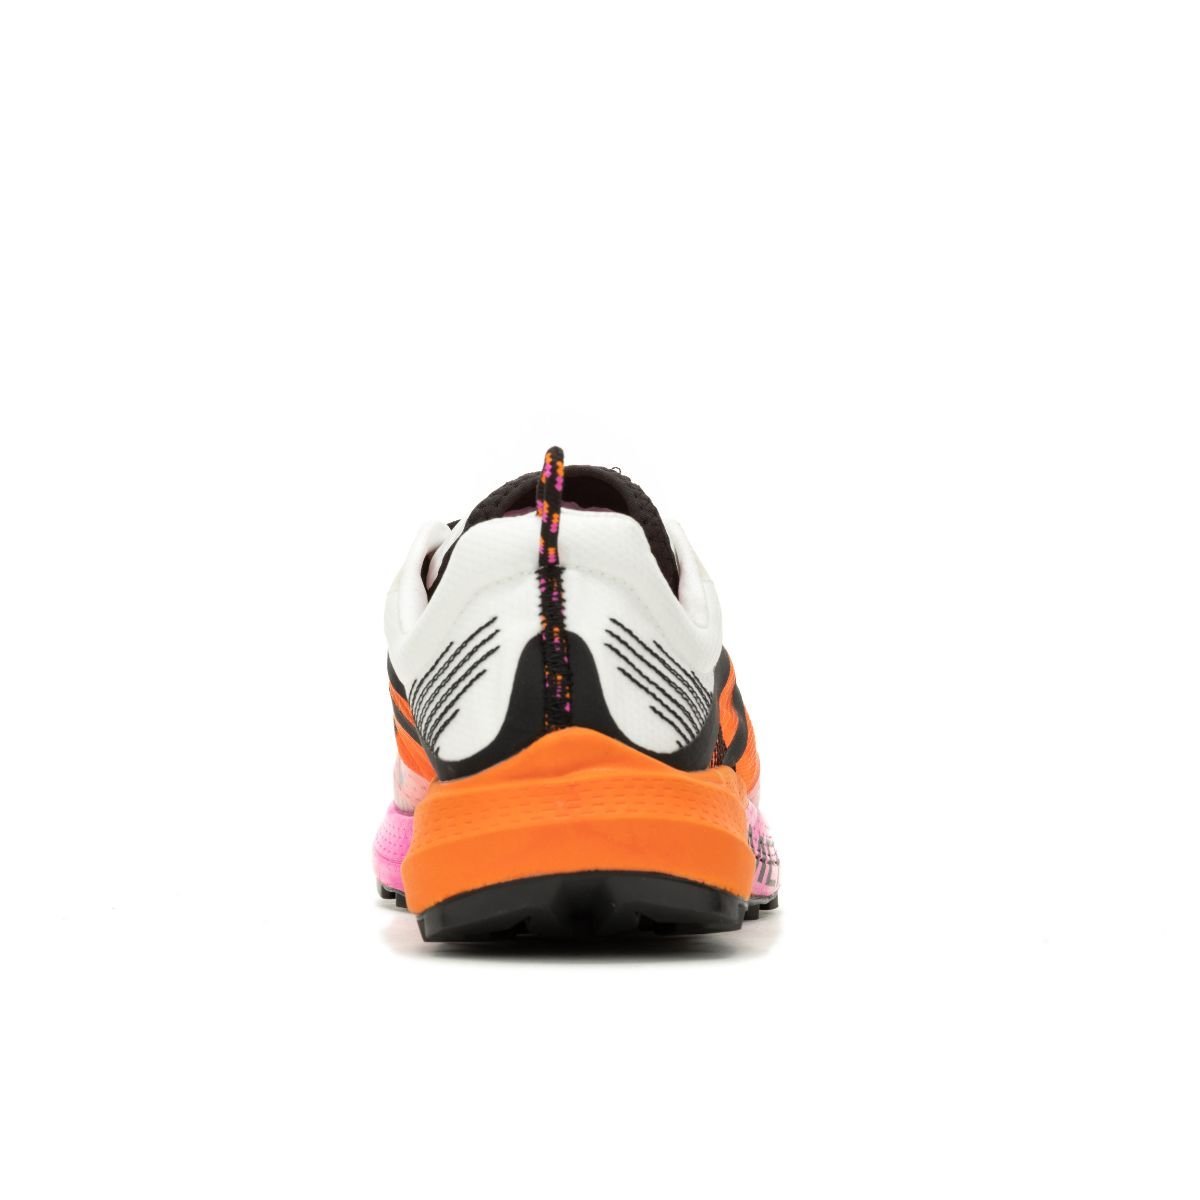 Topánky Merrell J037669 MTL MQM M - biela/oranžová